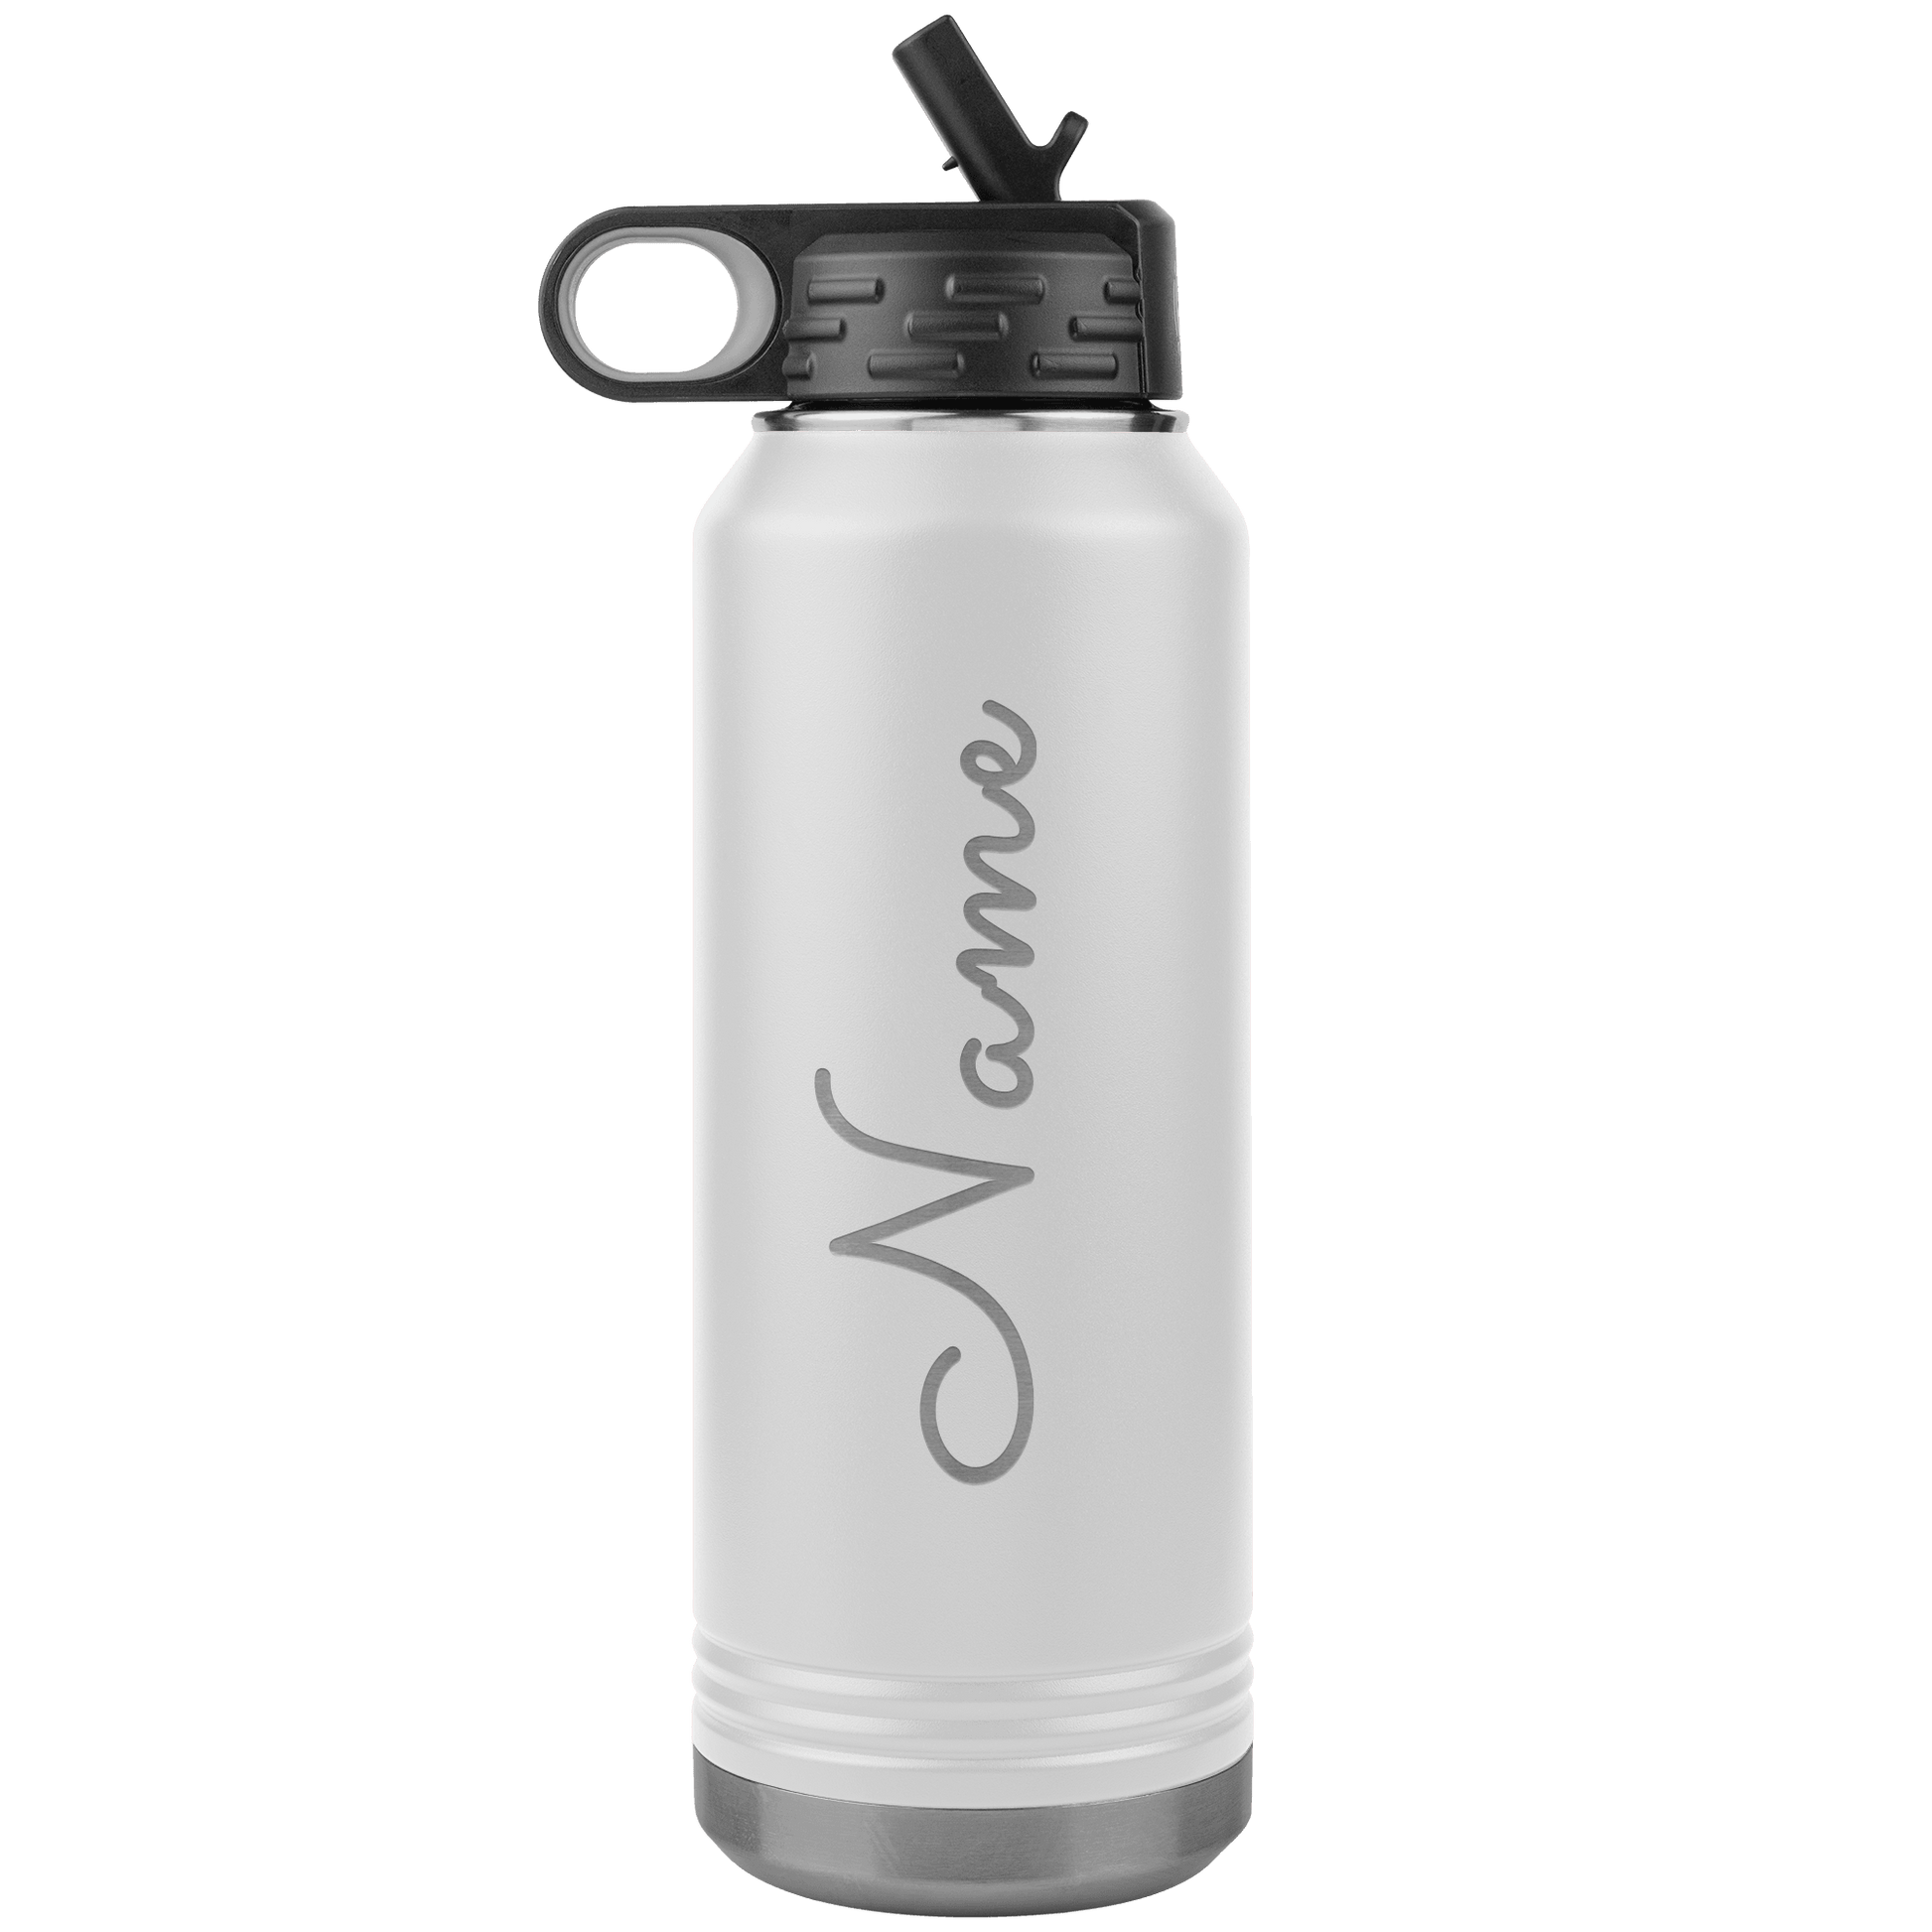 Customized Name Water Bottle Tumbler - Giftagic